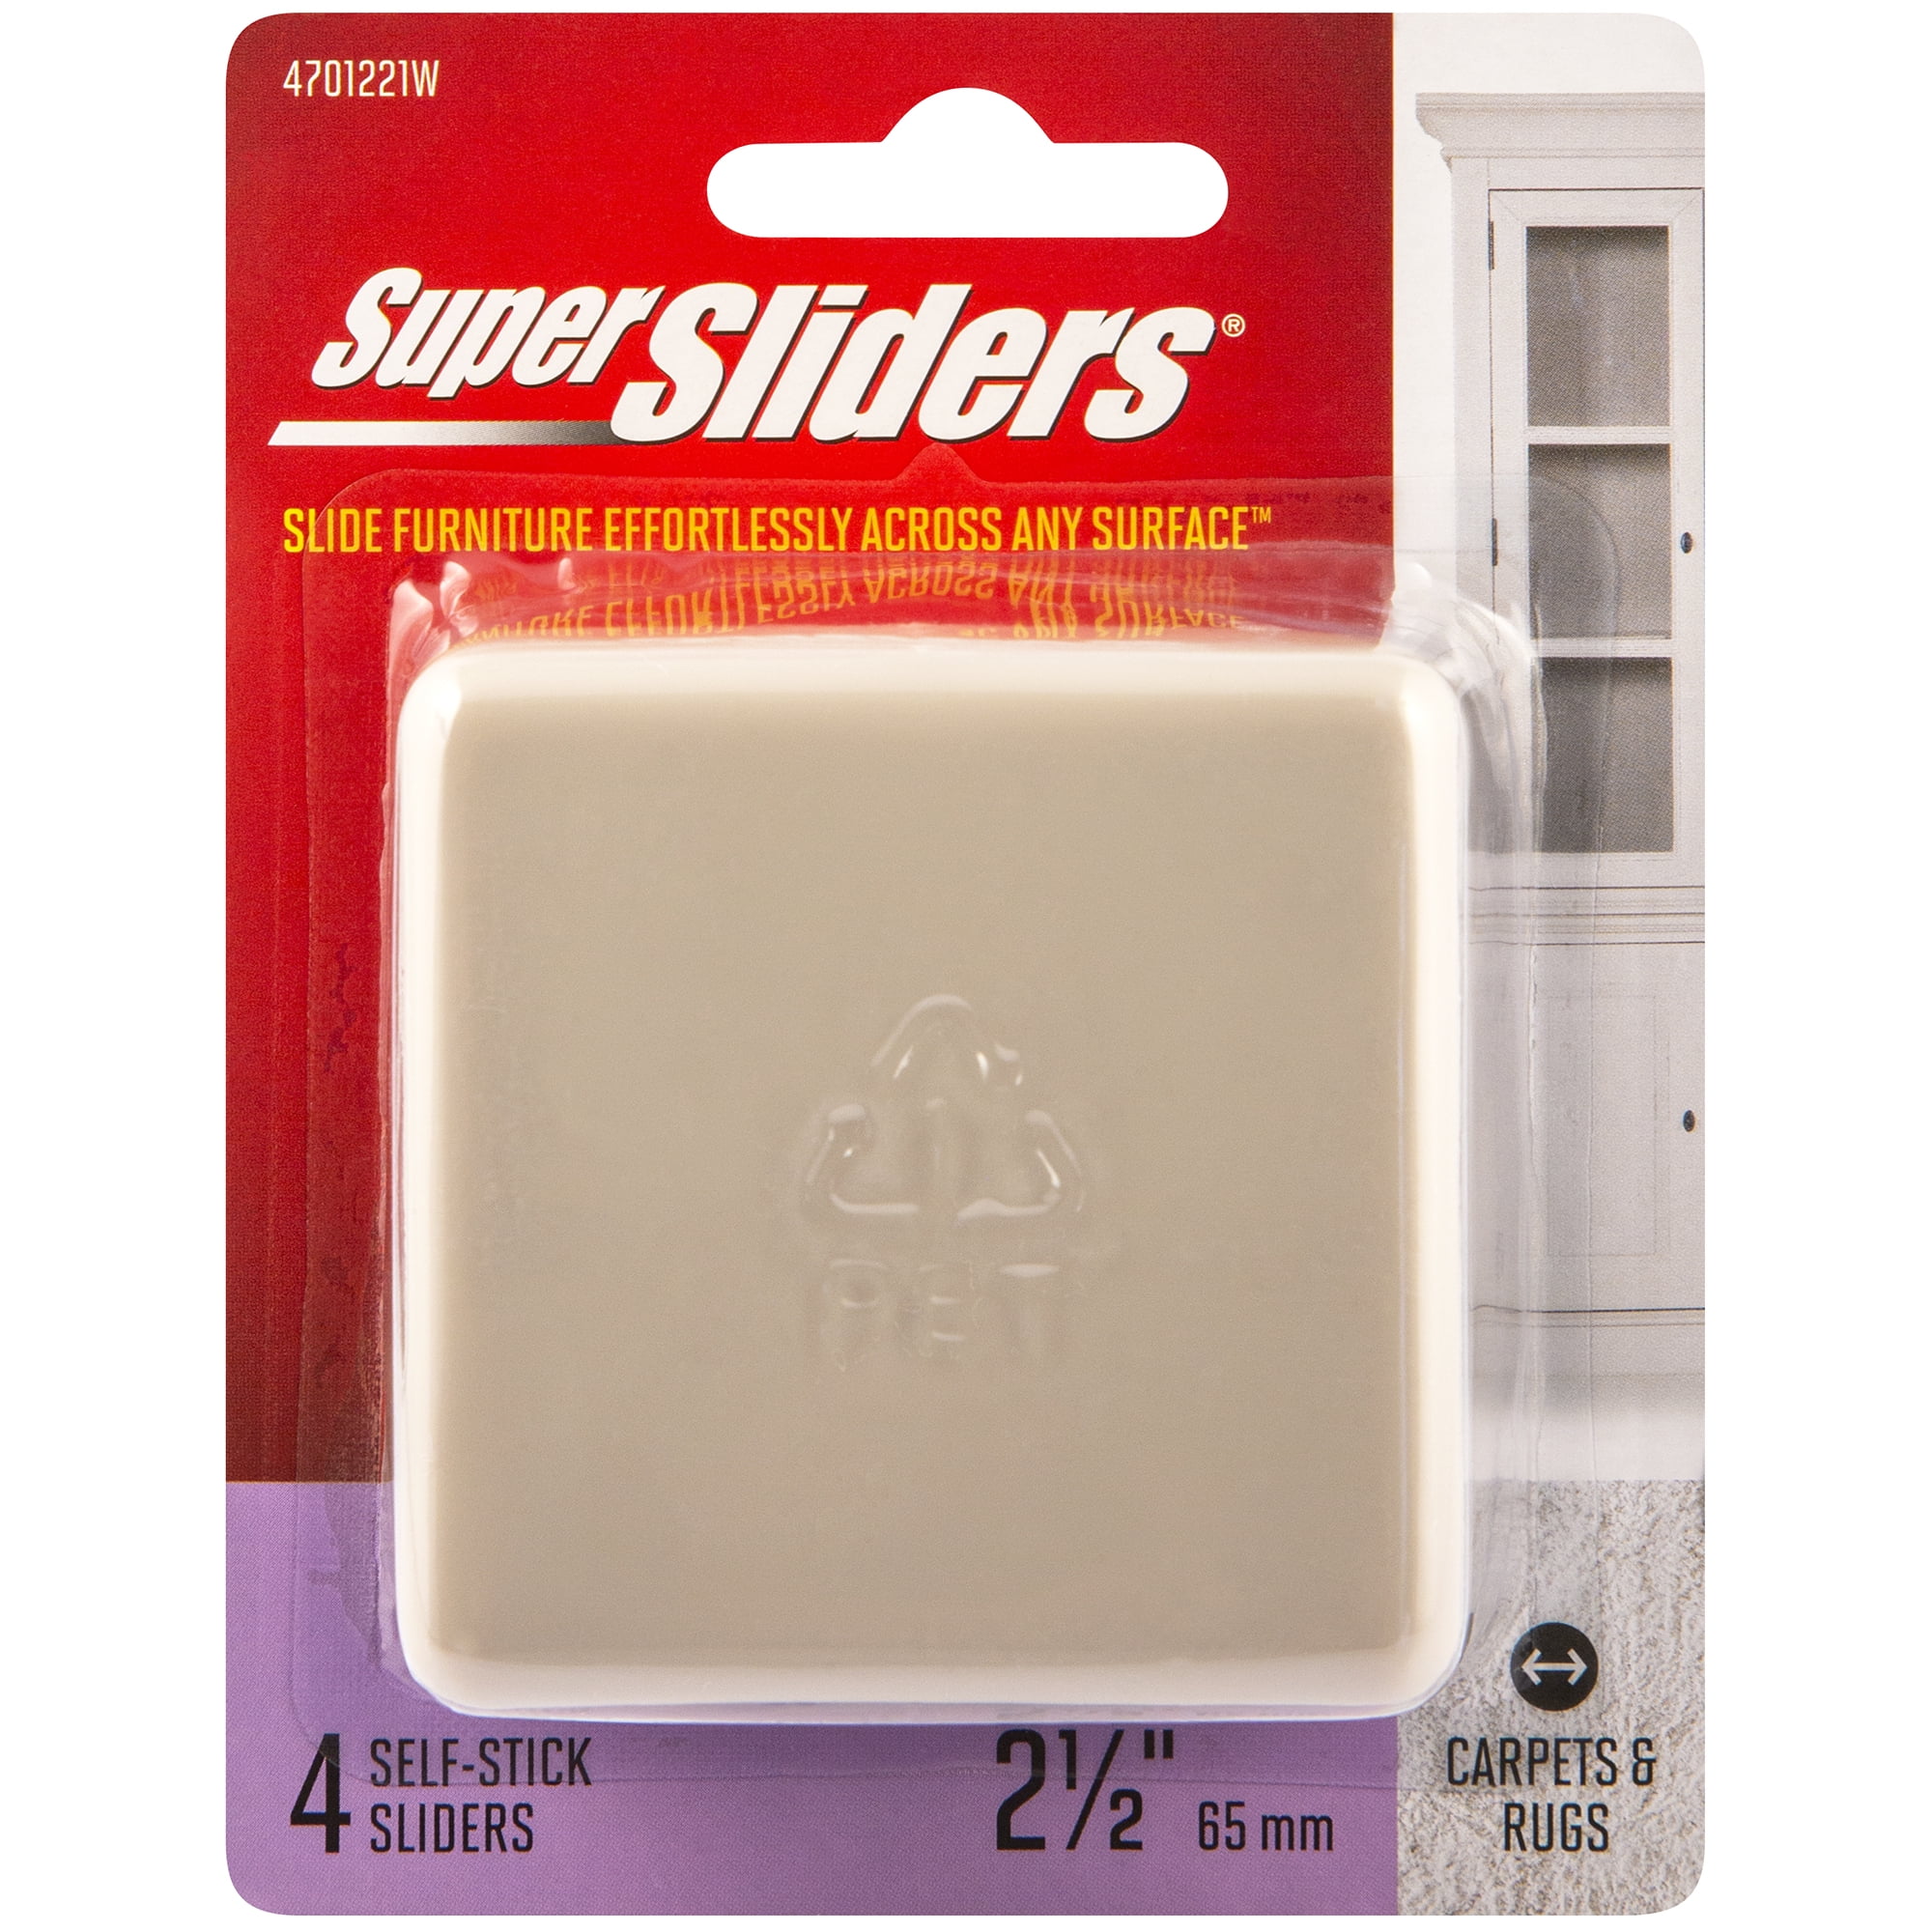 Super Sliders 2-1/2" Square Self Stick Furniture Sliders, Beige, 4 Pack